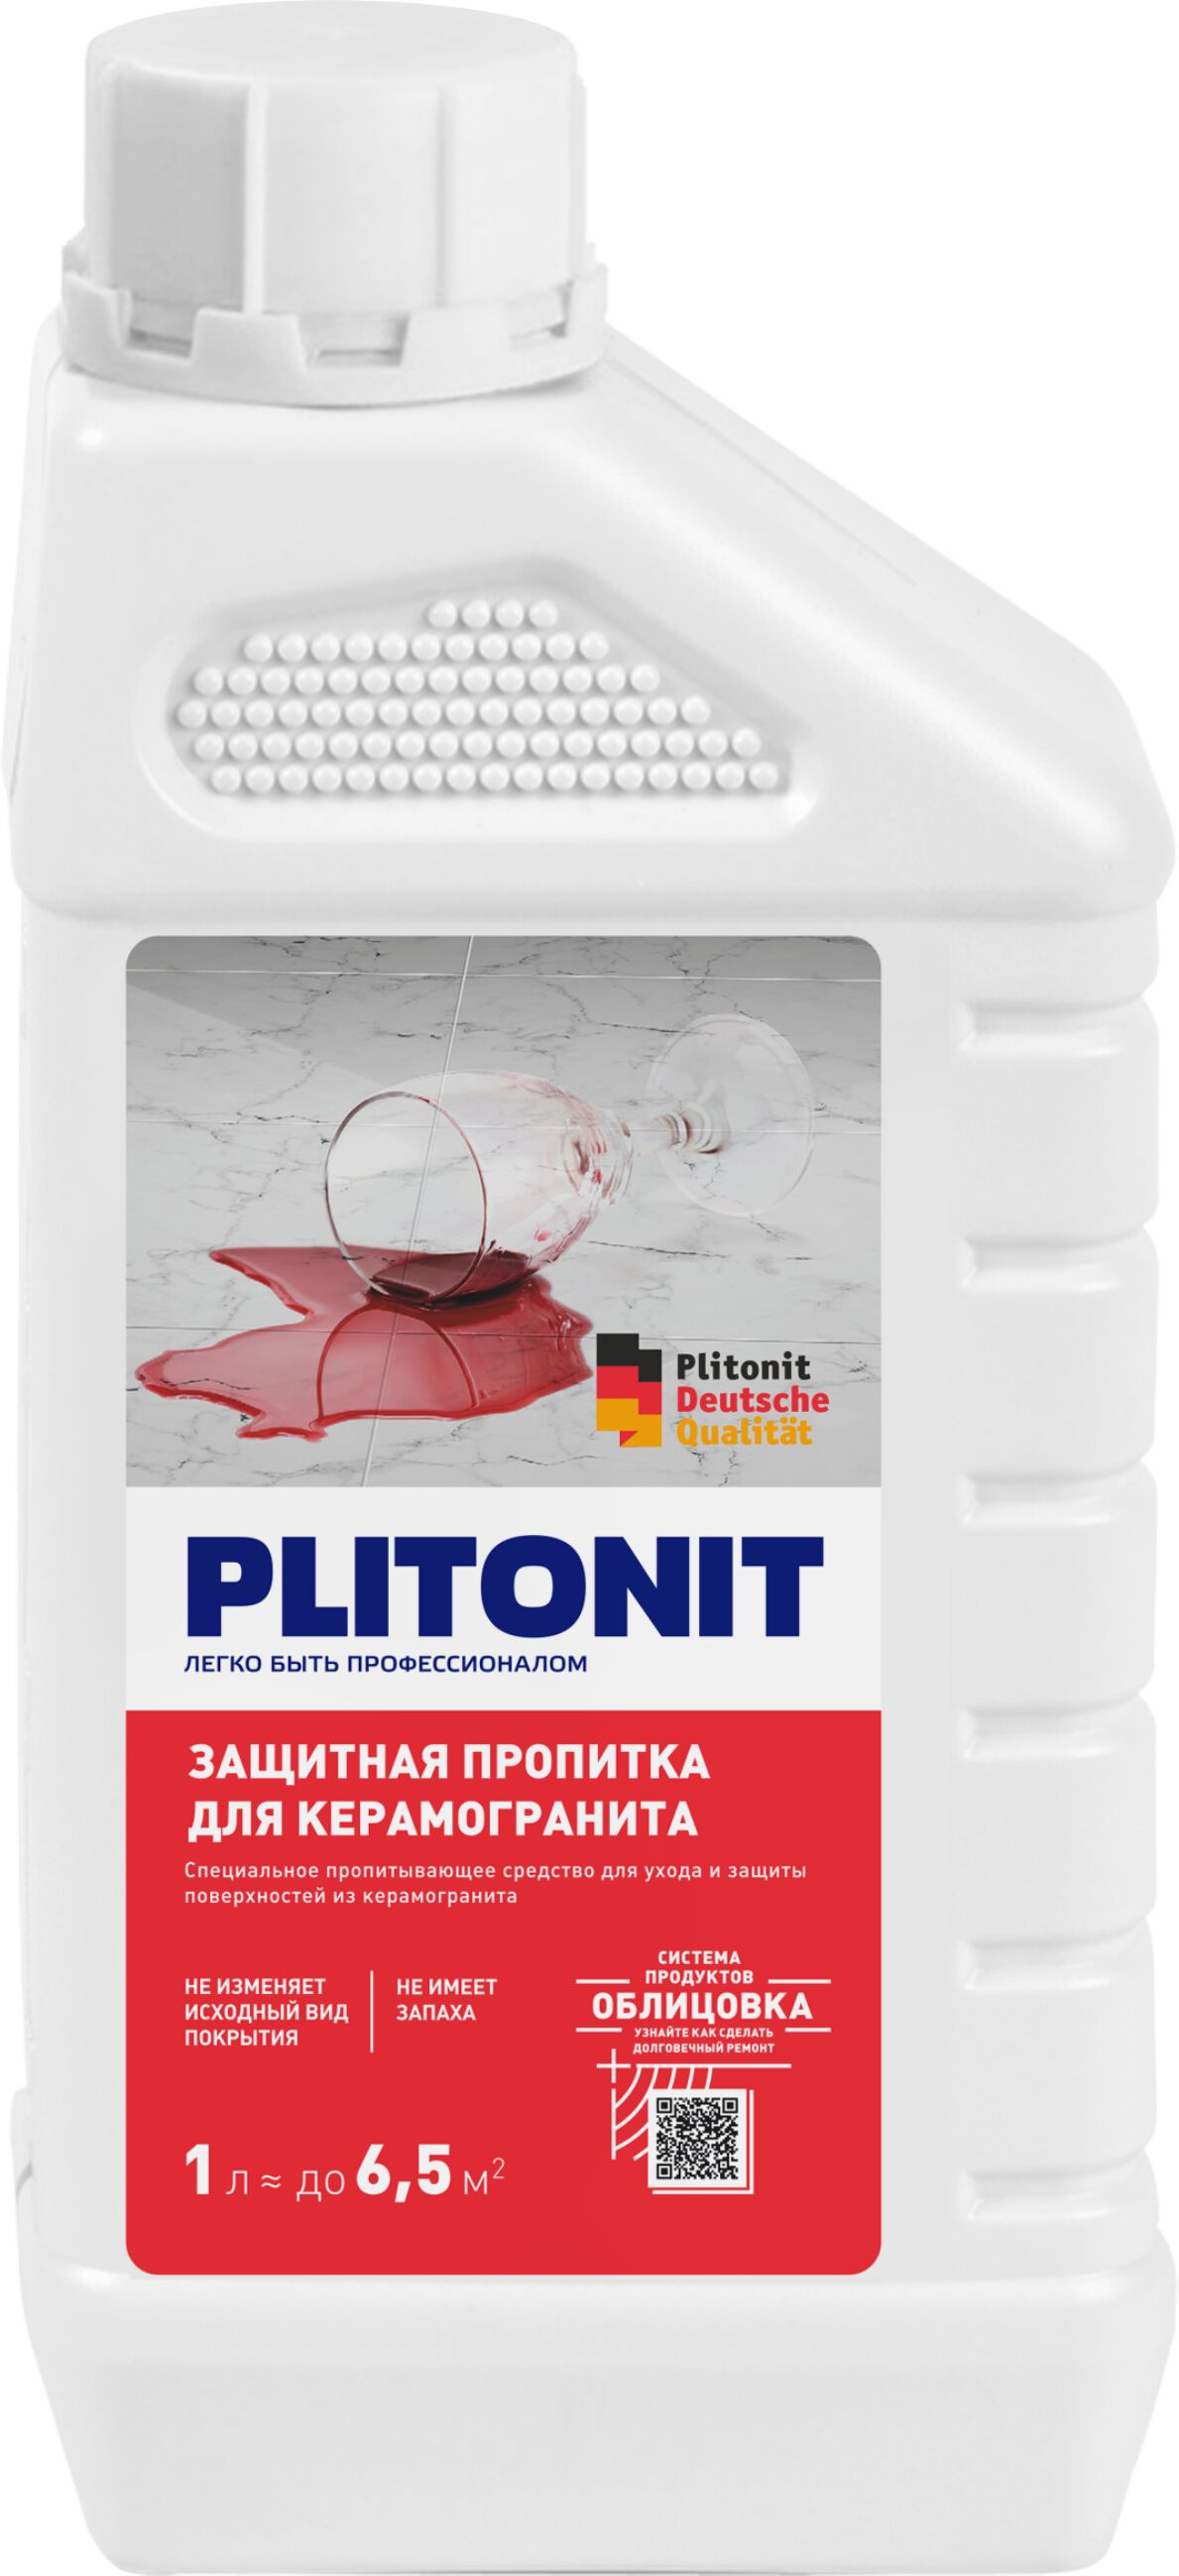 PLITONIT Защитная пропитка для керамогранита - 1 л. (РФ)